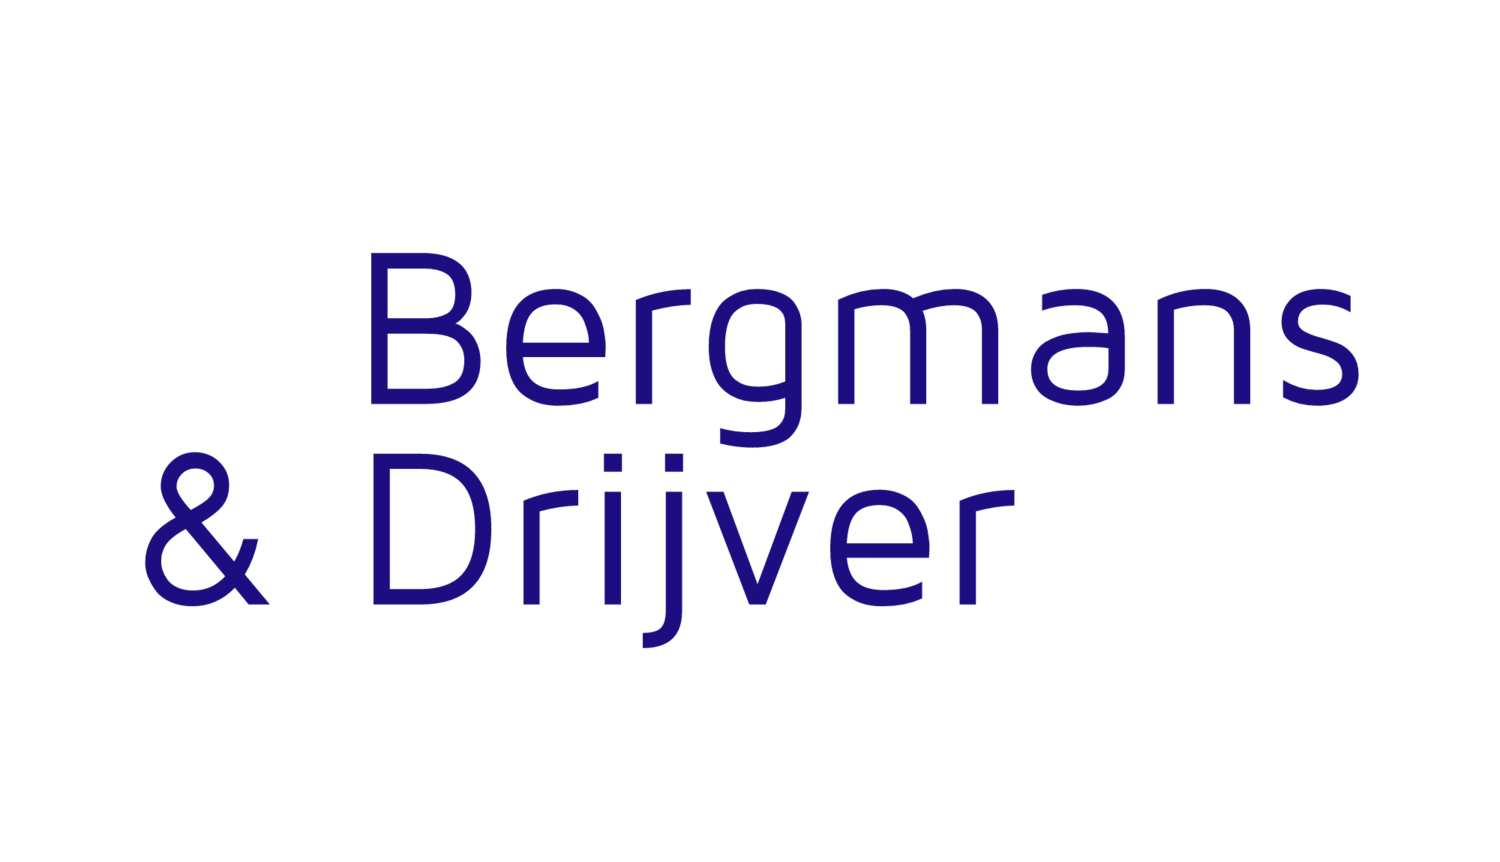 Bergmans & Drijver